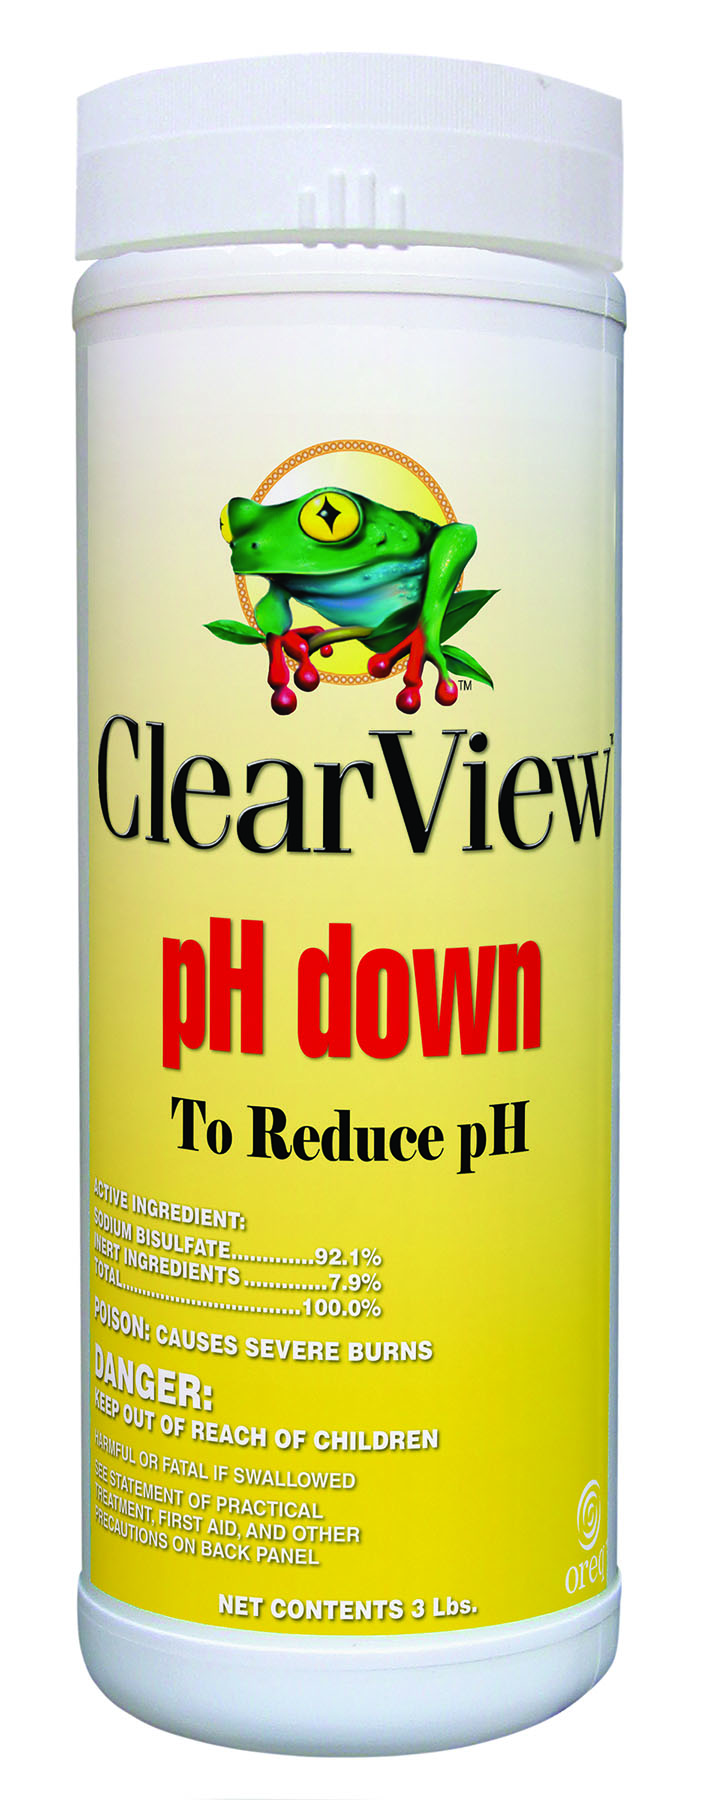 Clearview Ph Down 8X7 lb/cs